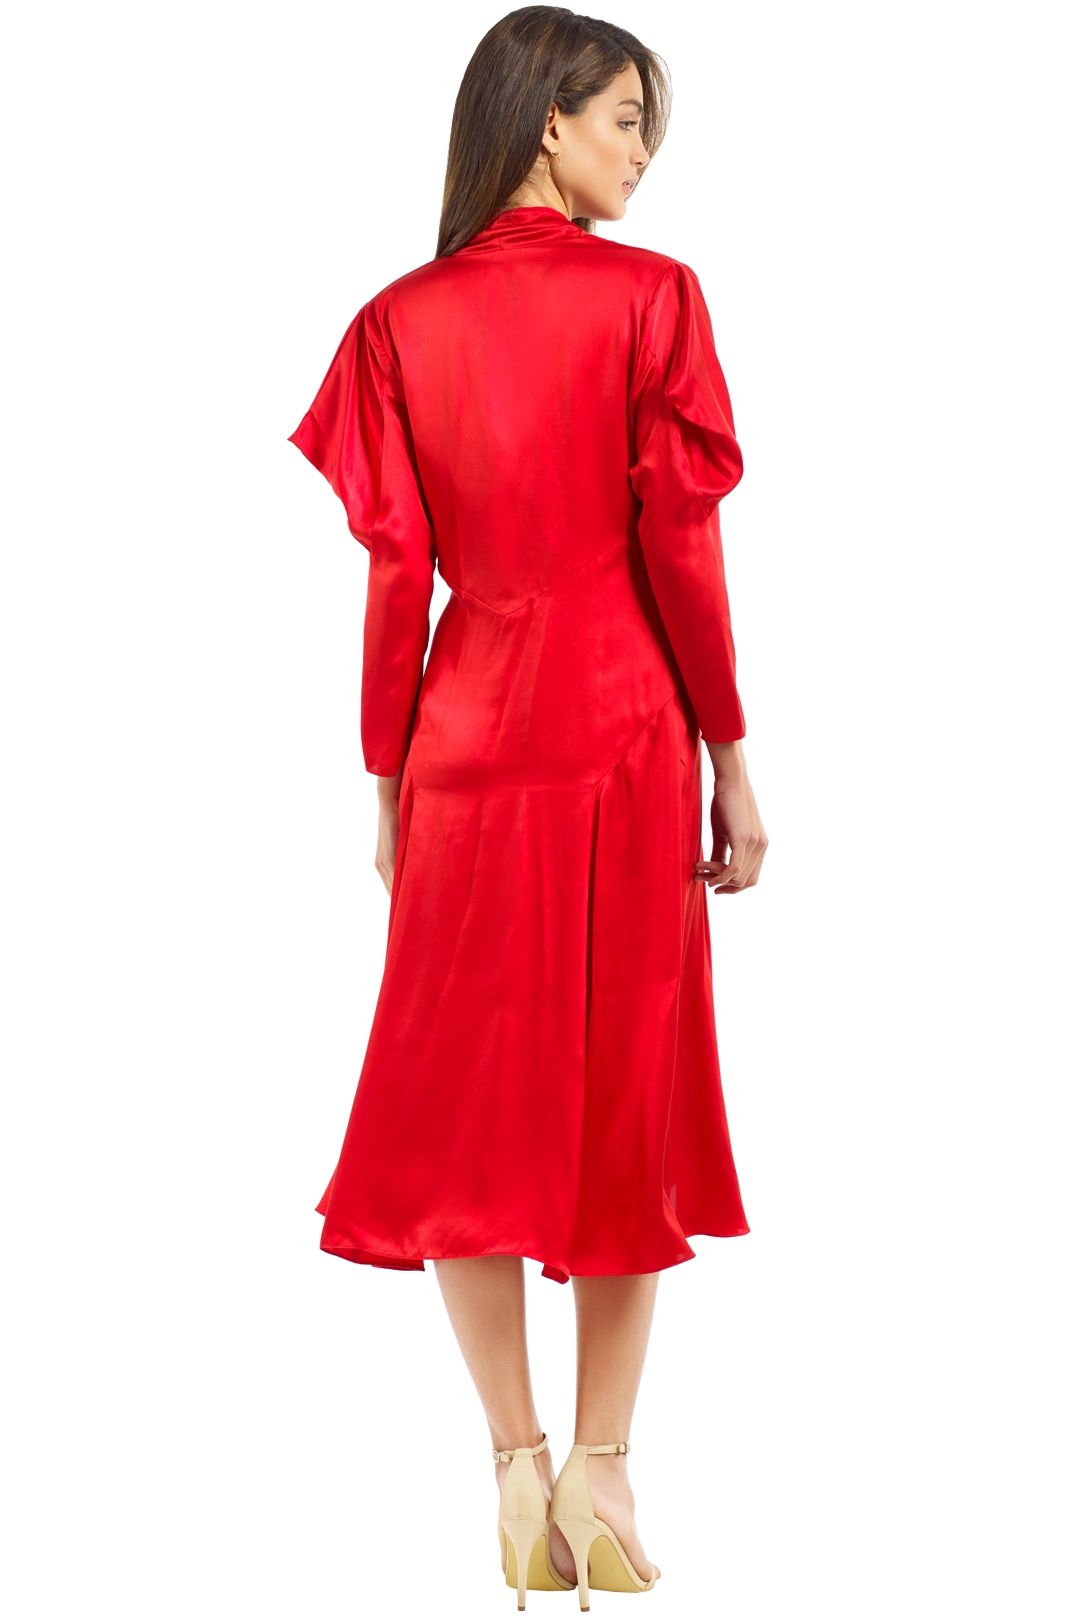 Bianca Spender - Crimson Silk Satin Liberation Dress - Red - Back